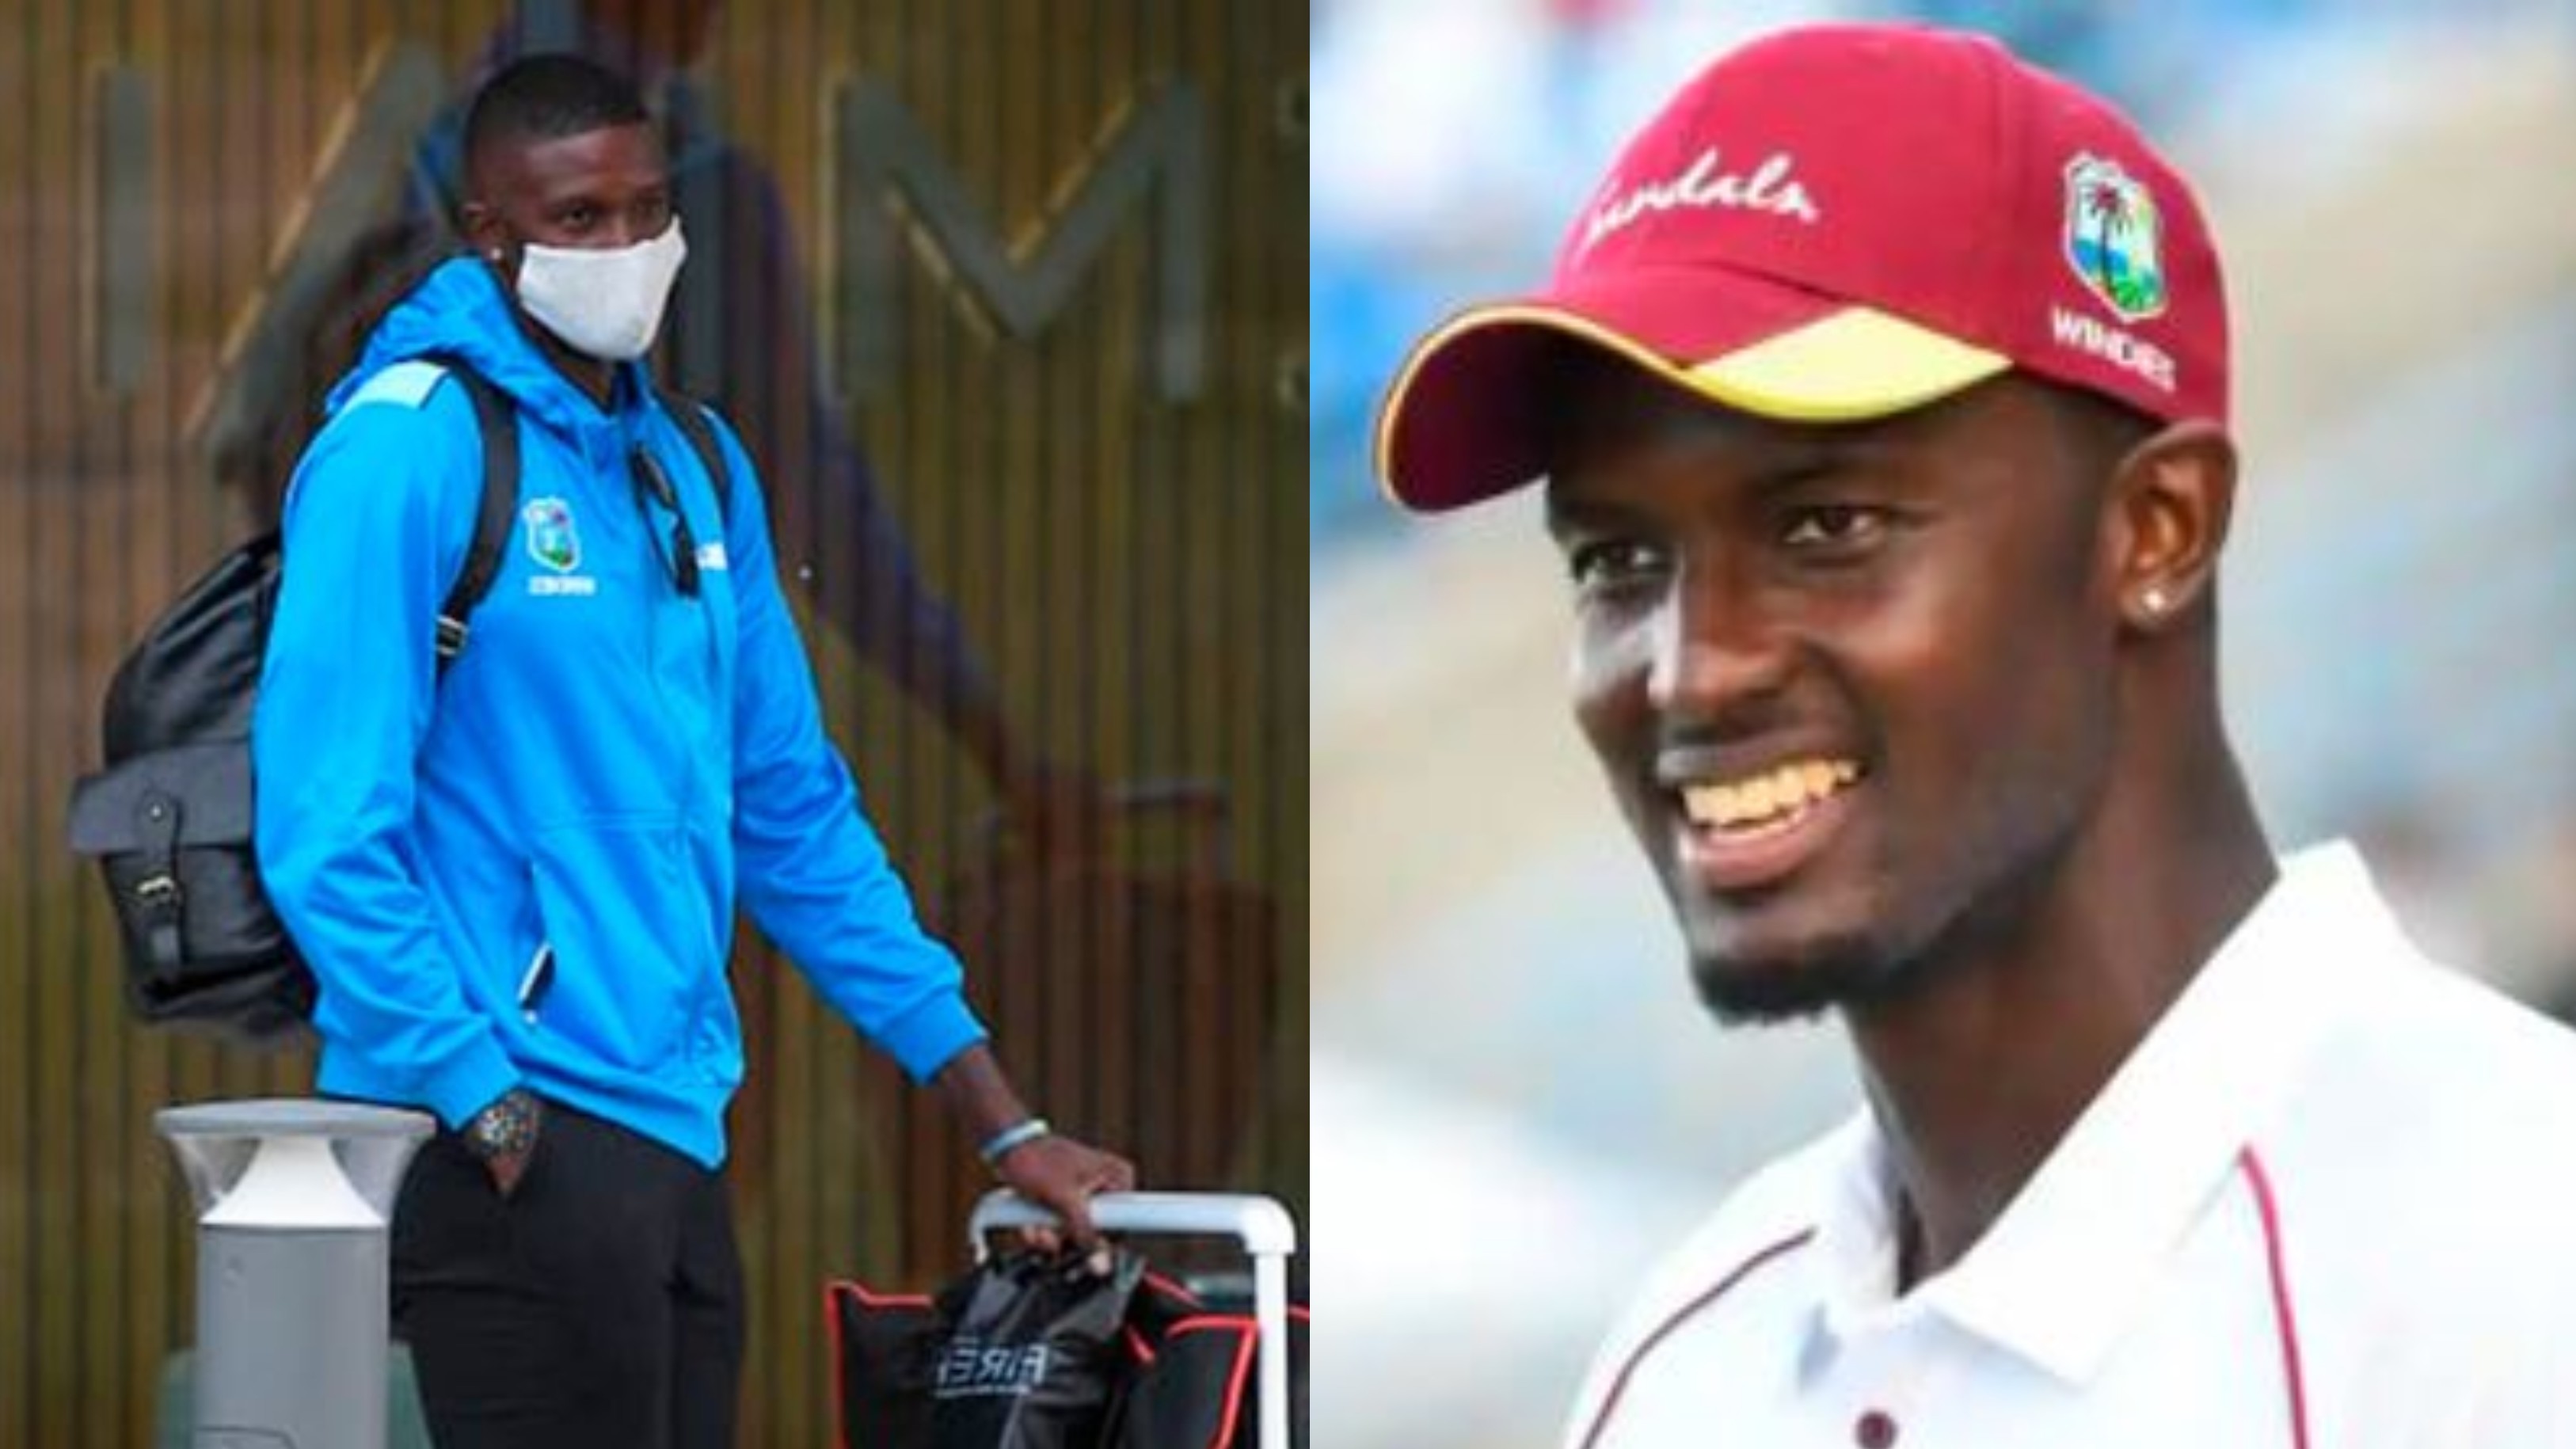 ENG v WI 2020: West Indies should cherish cricket return after coronavirus hiatus, says Jason Holder